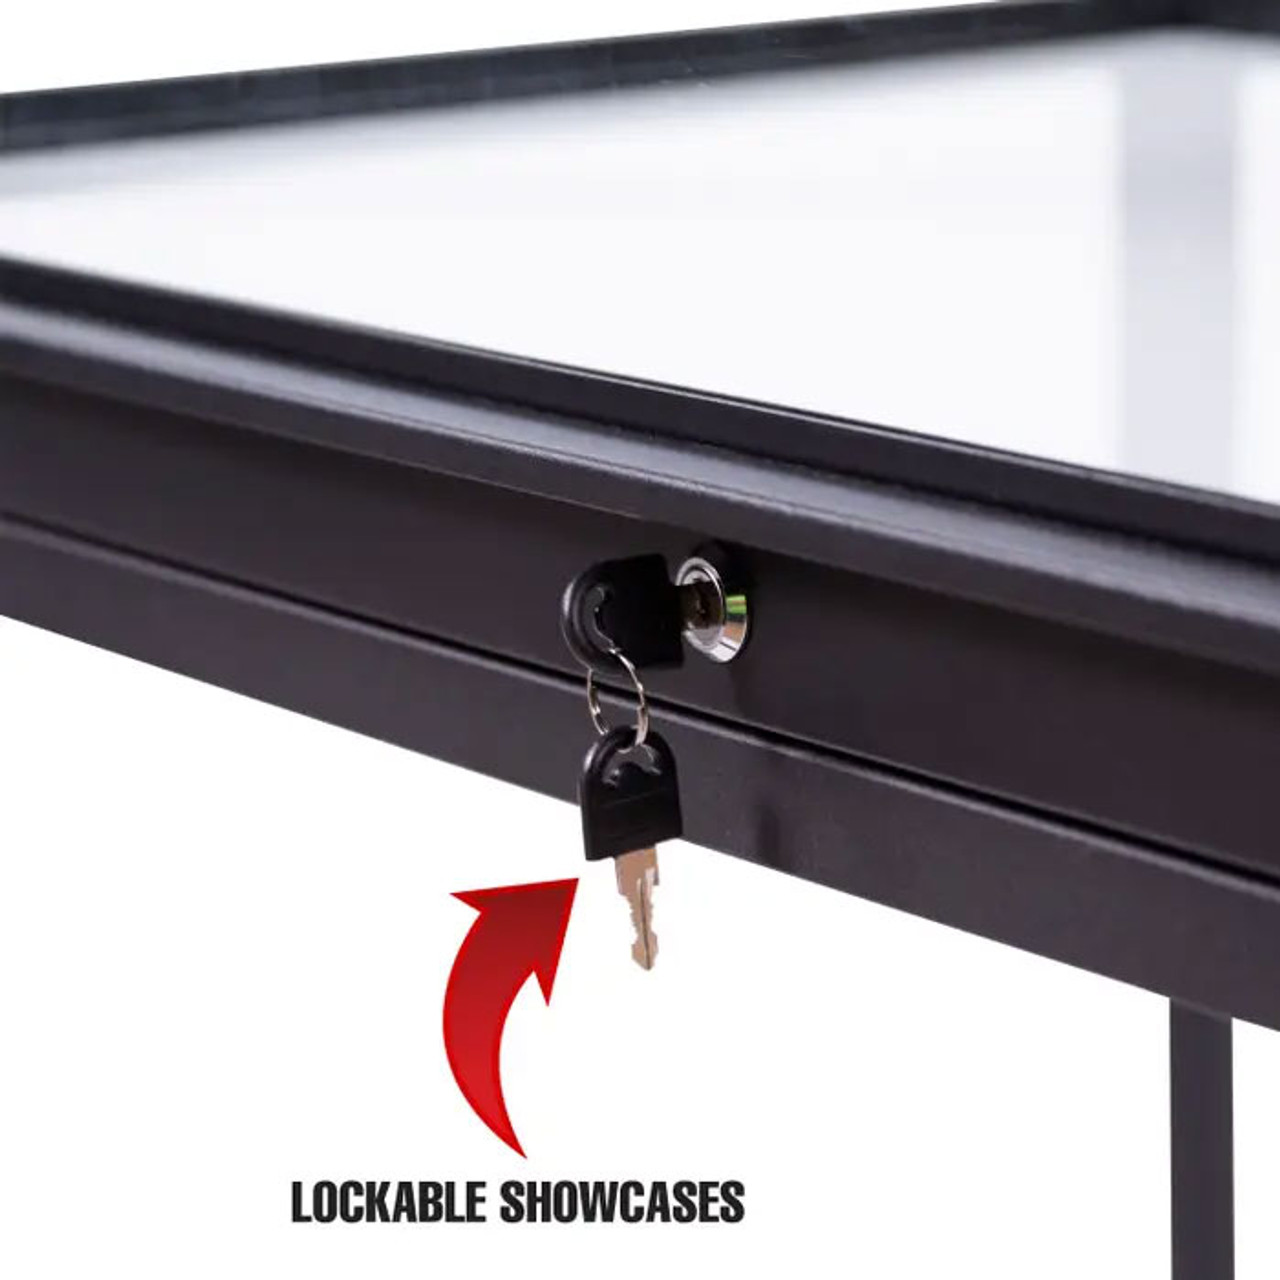 48" Black Deluxe Glass Showcase includes Light & Lock